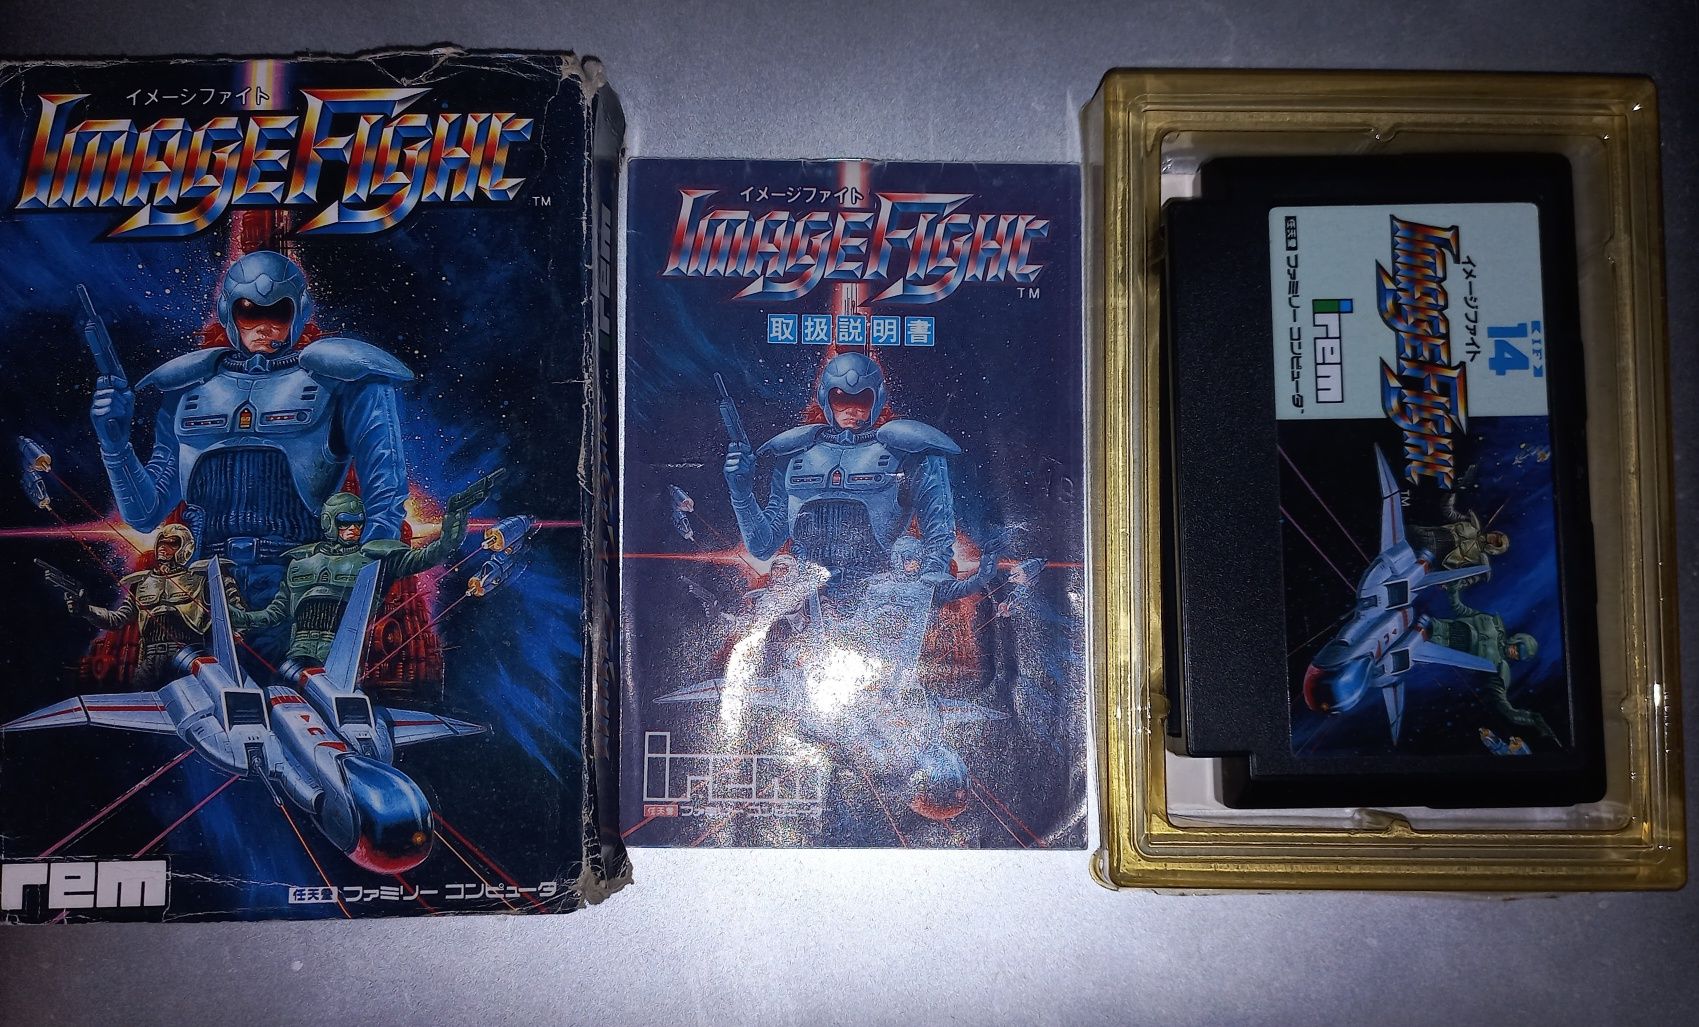 Famicom, NES, Nintendo - Image Fight complet